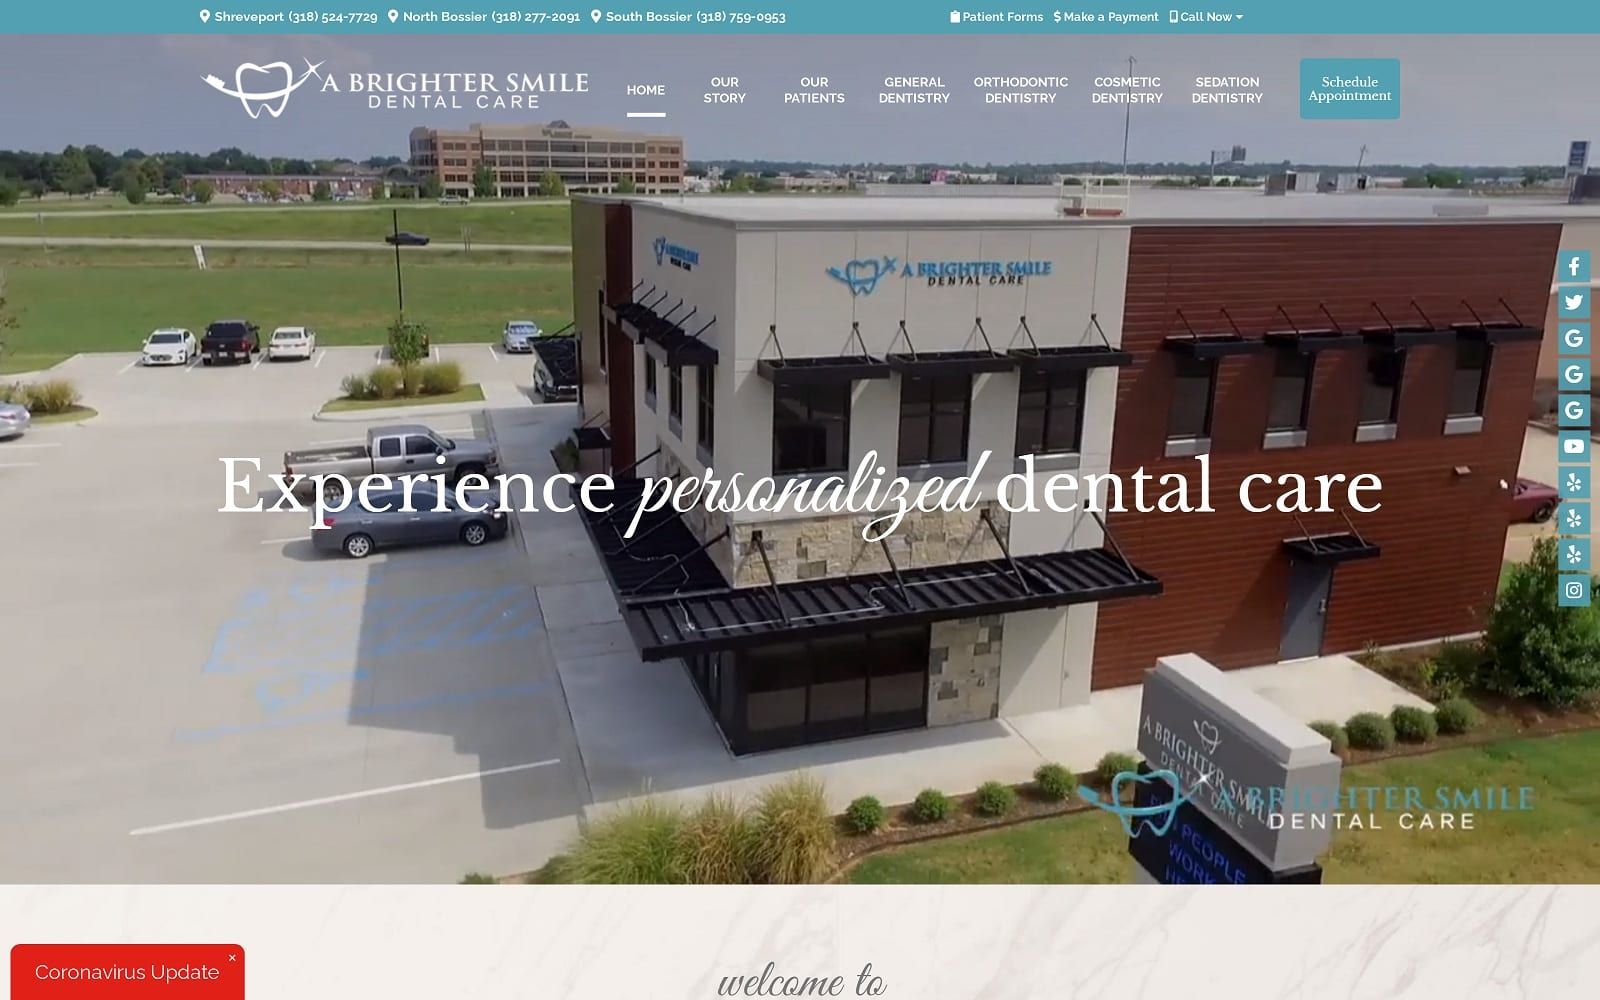 The screenshot of a brighter smile dental care abrightersmiledentalcare. Com website